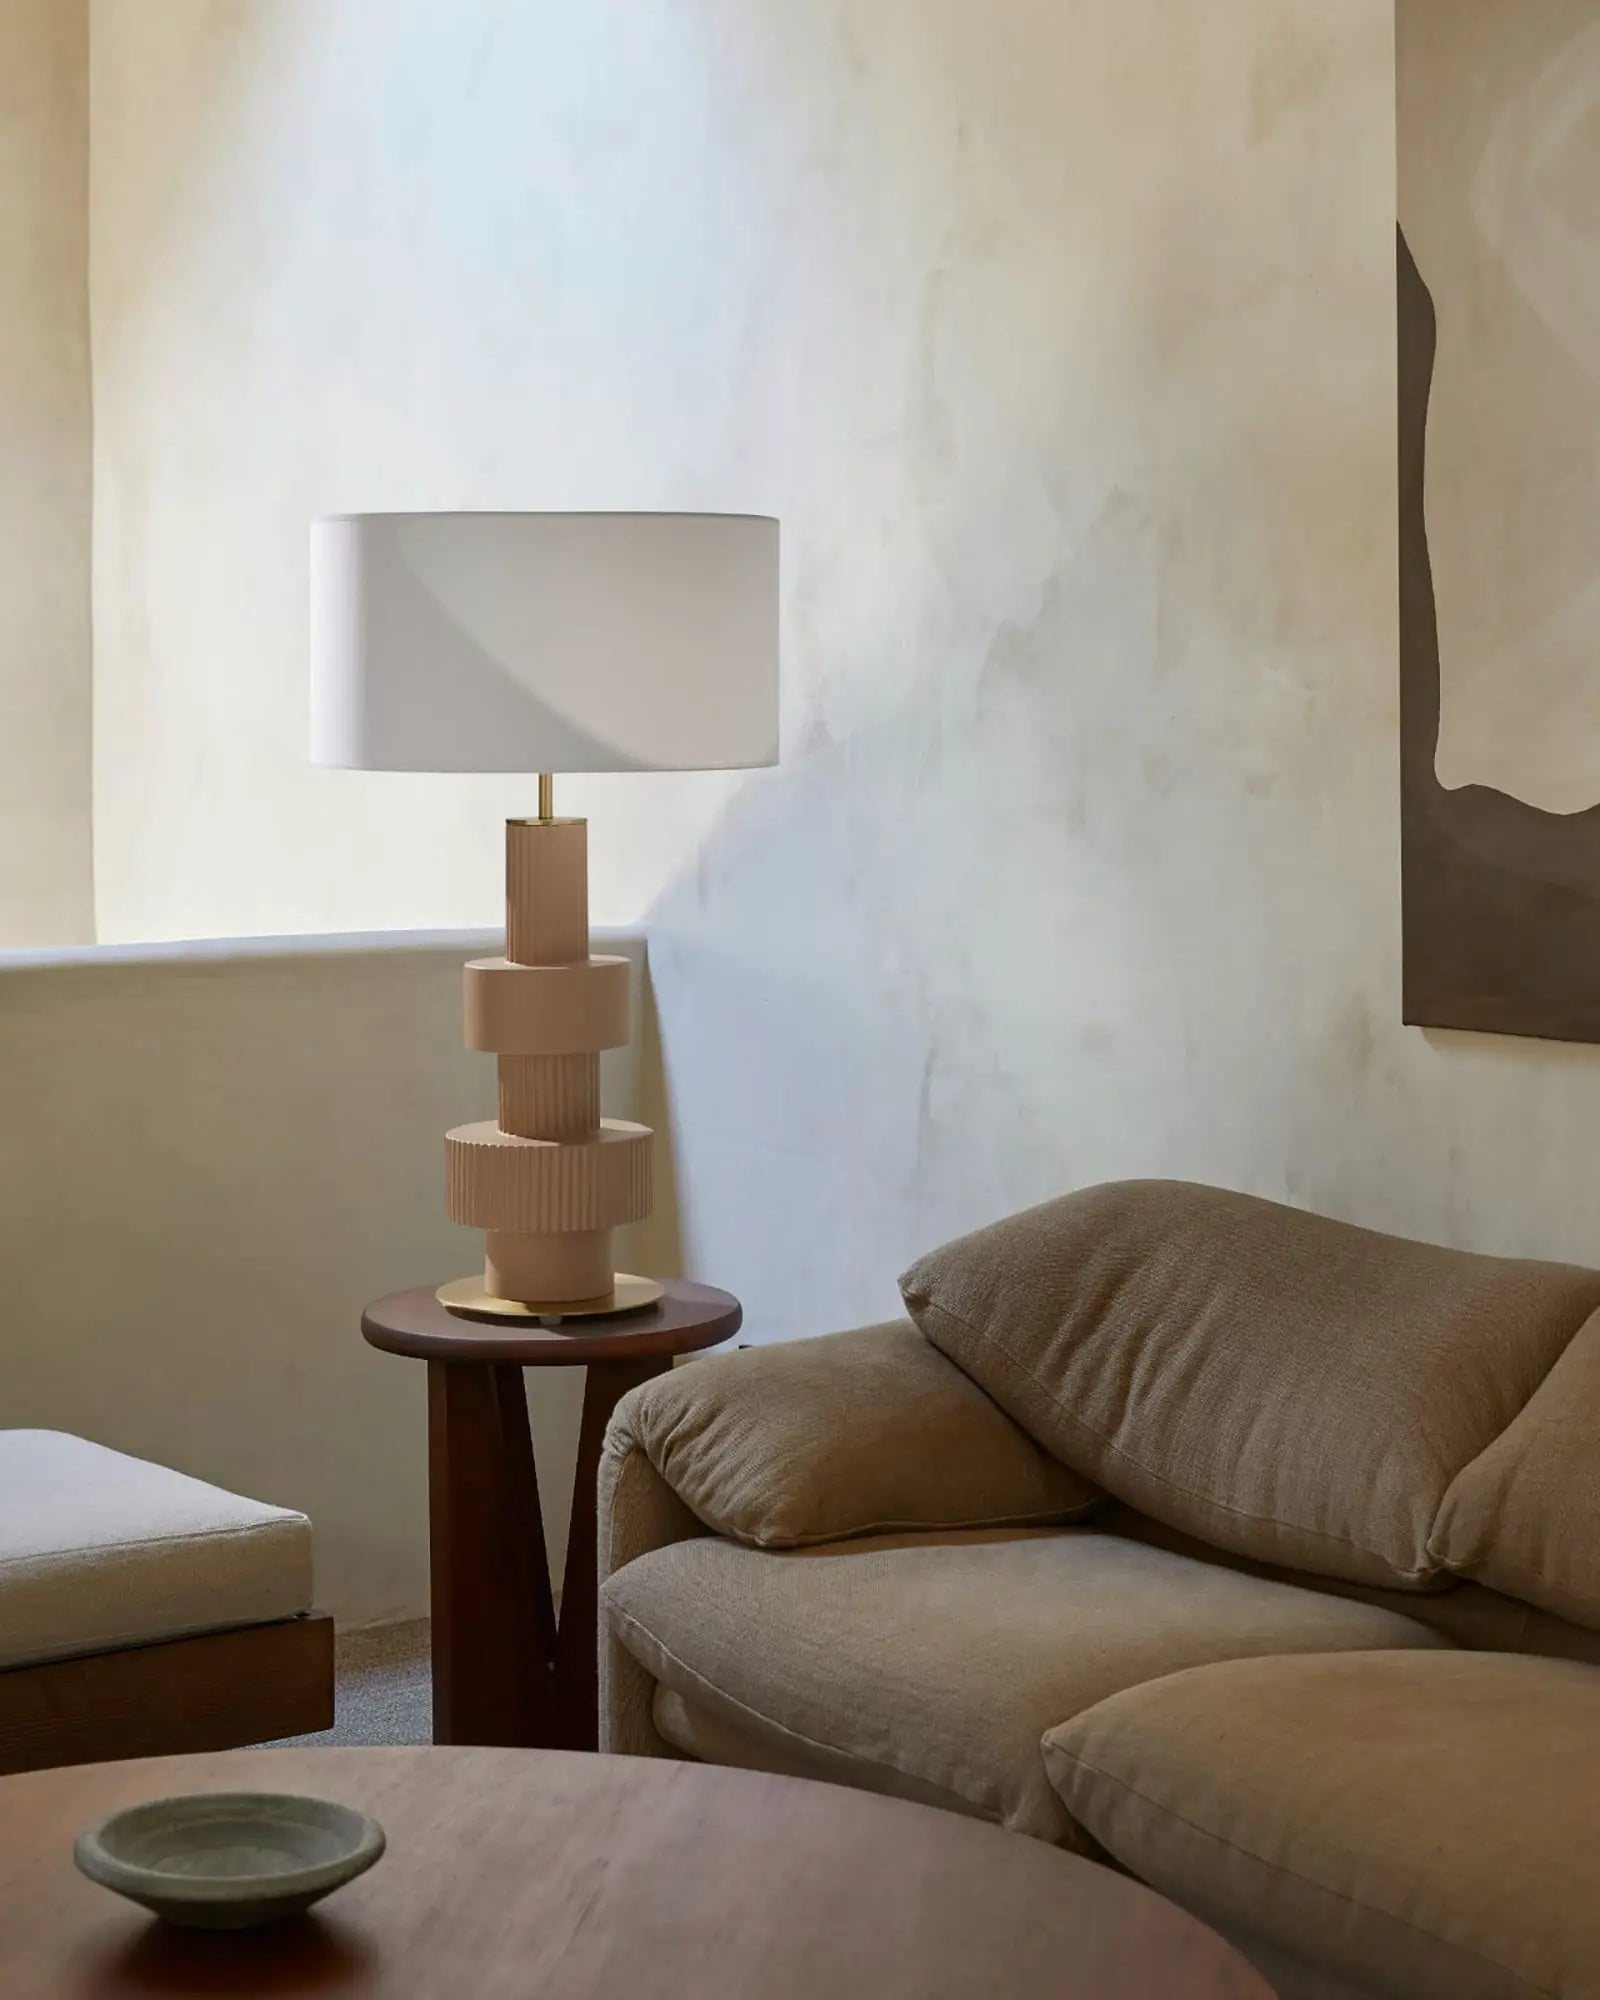 Babel ceramic contemporary table lamp with fabric shadenear a sofa in livingroom